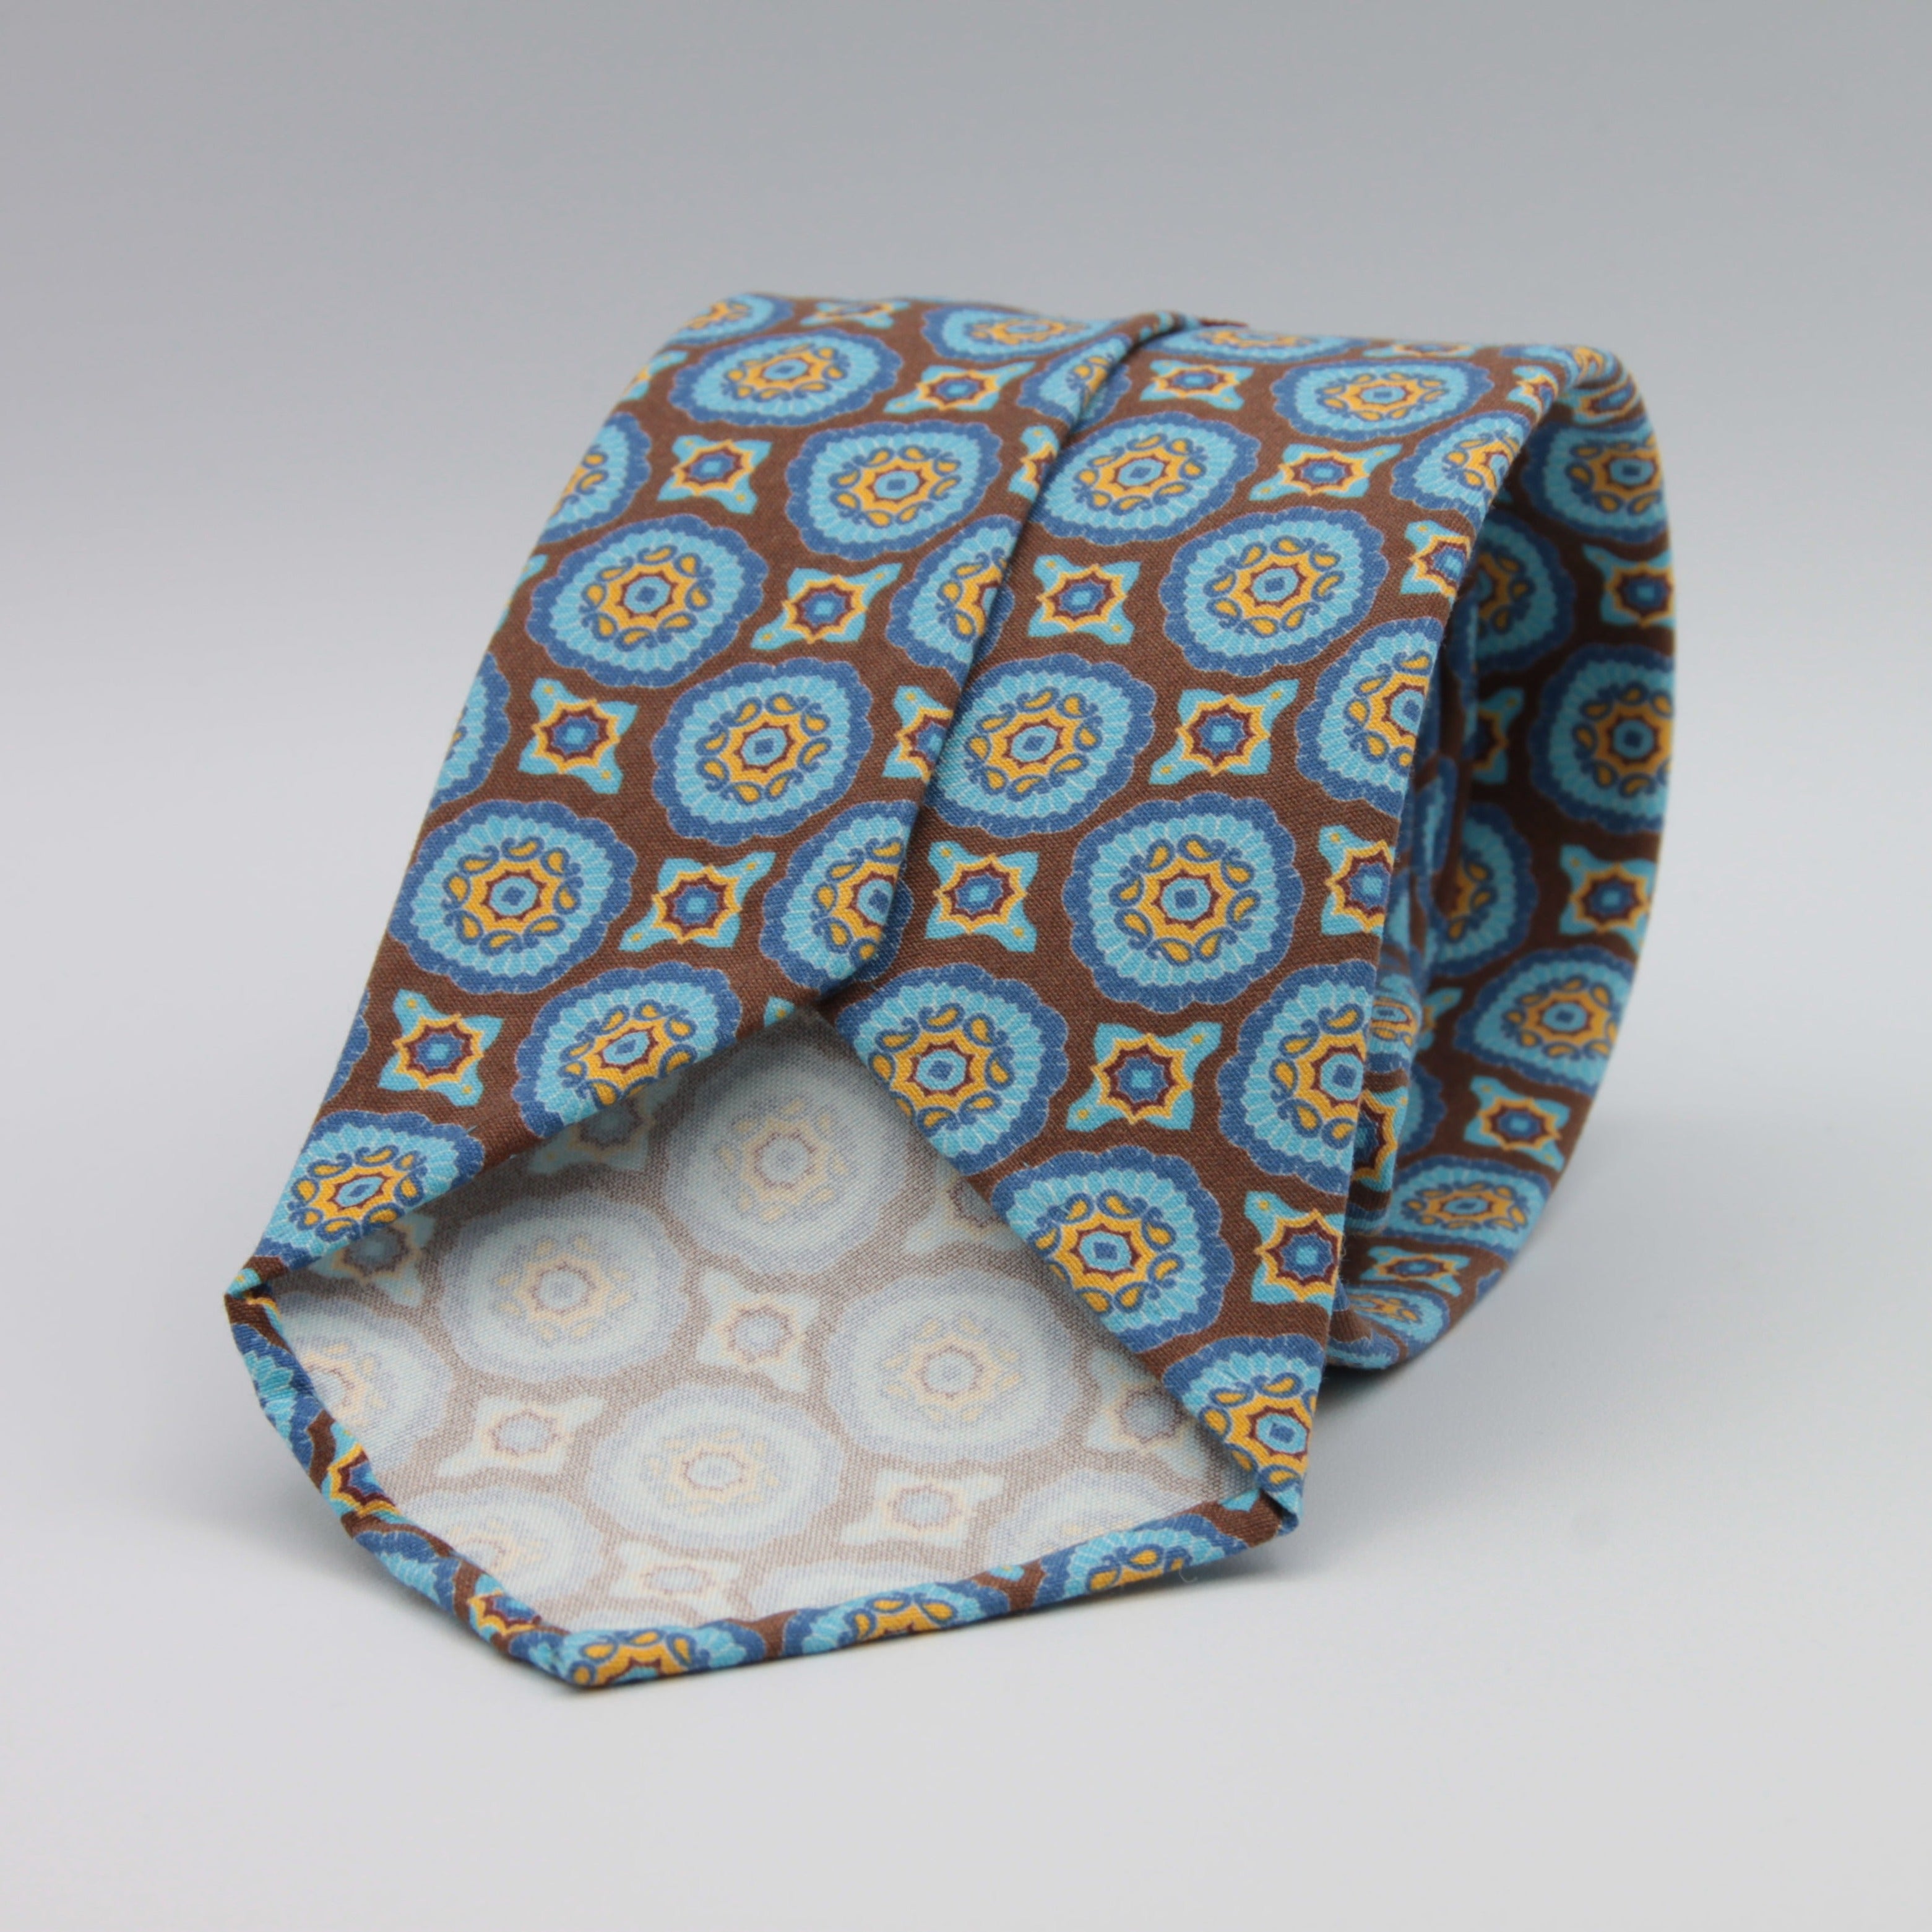 Cruciani & Bella 100% Printed Madder Silk  Italian fabric Unlined tie Brown, Blue and Yellow Motifs Tie Handmade in Italy 8 cm x 150 cm #7622